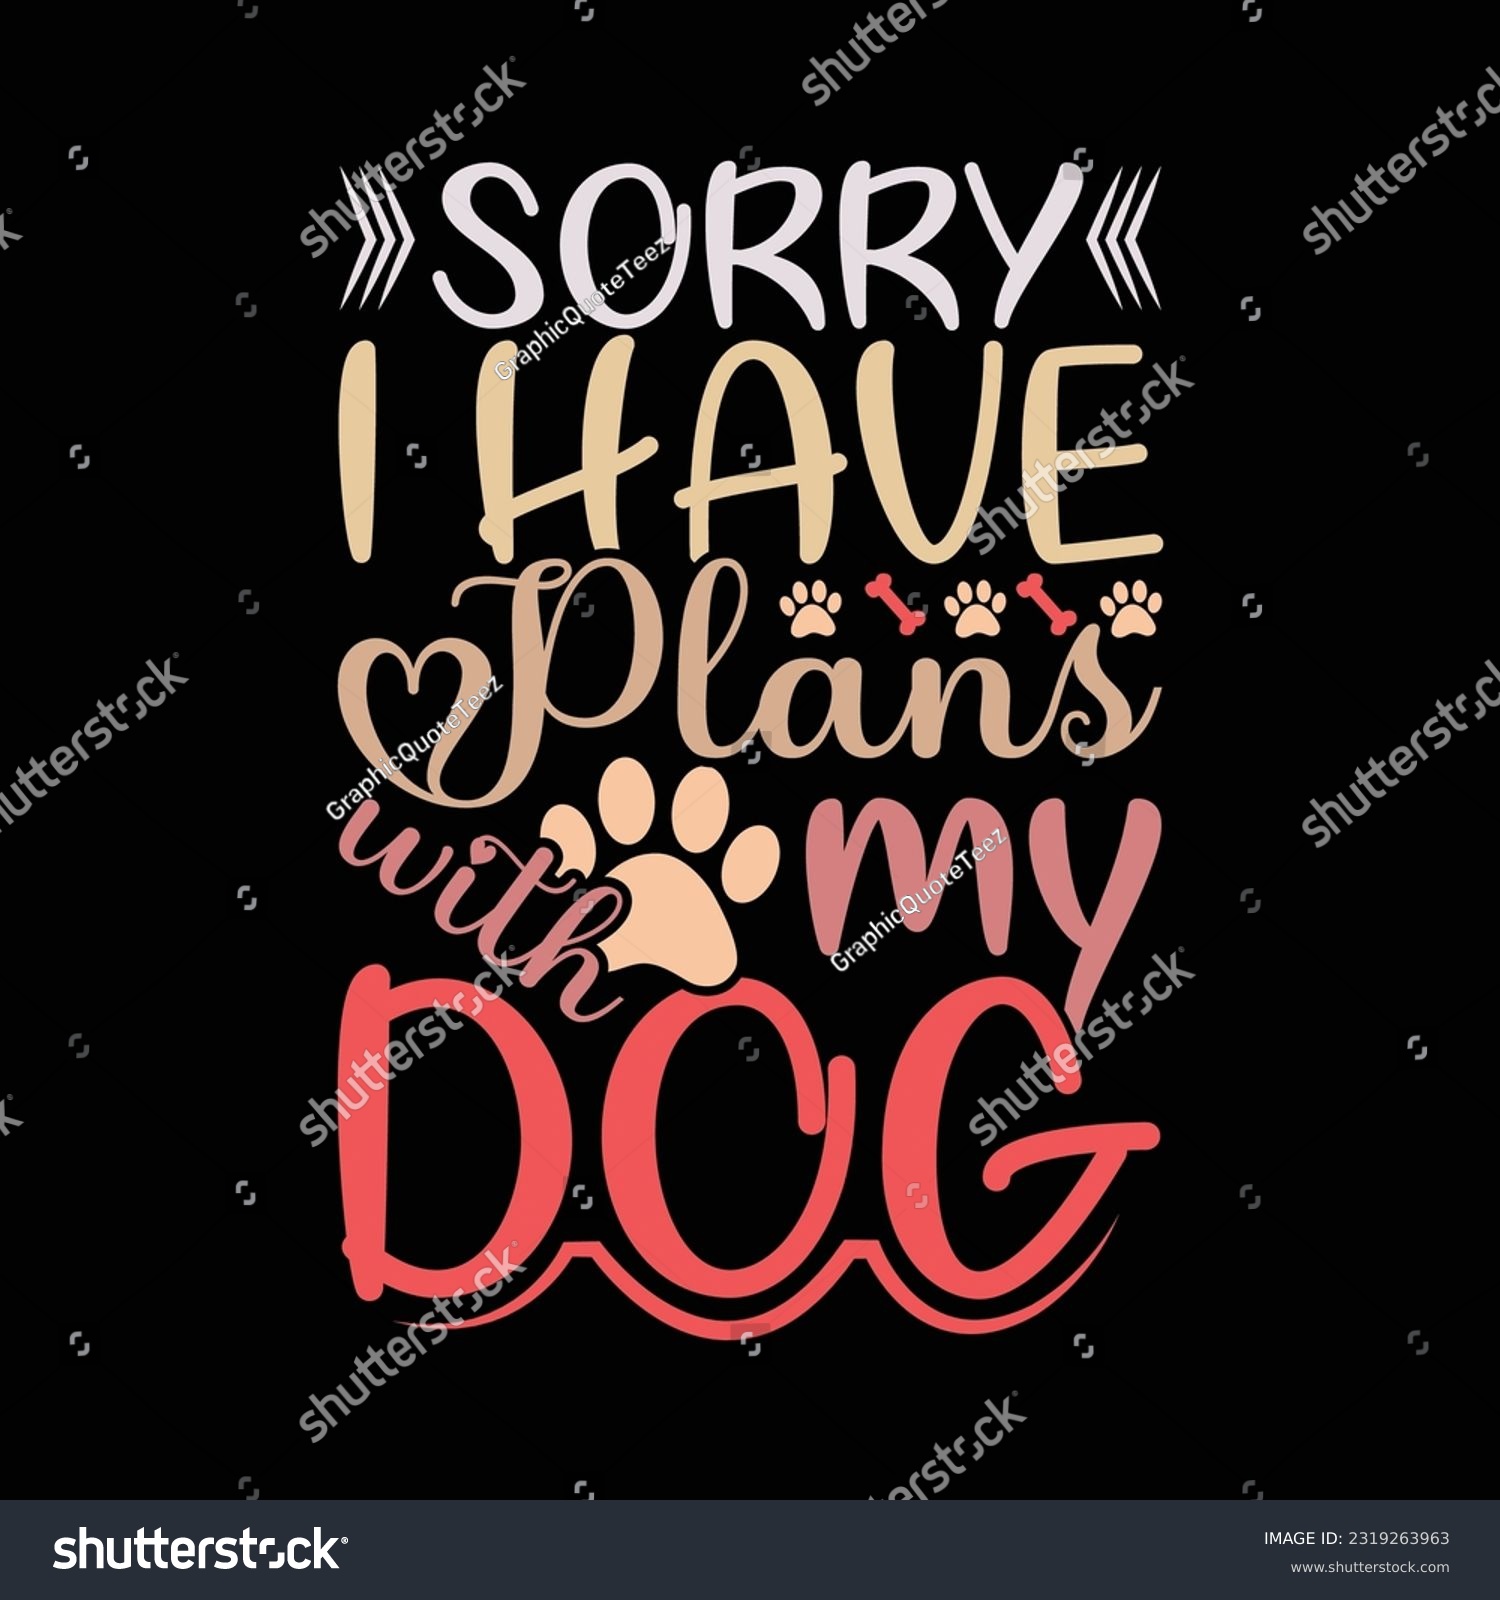 SVG of sorry i have plans with my dog, sublimation dog lettering design, animal dog tee card vector illustration svg